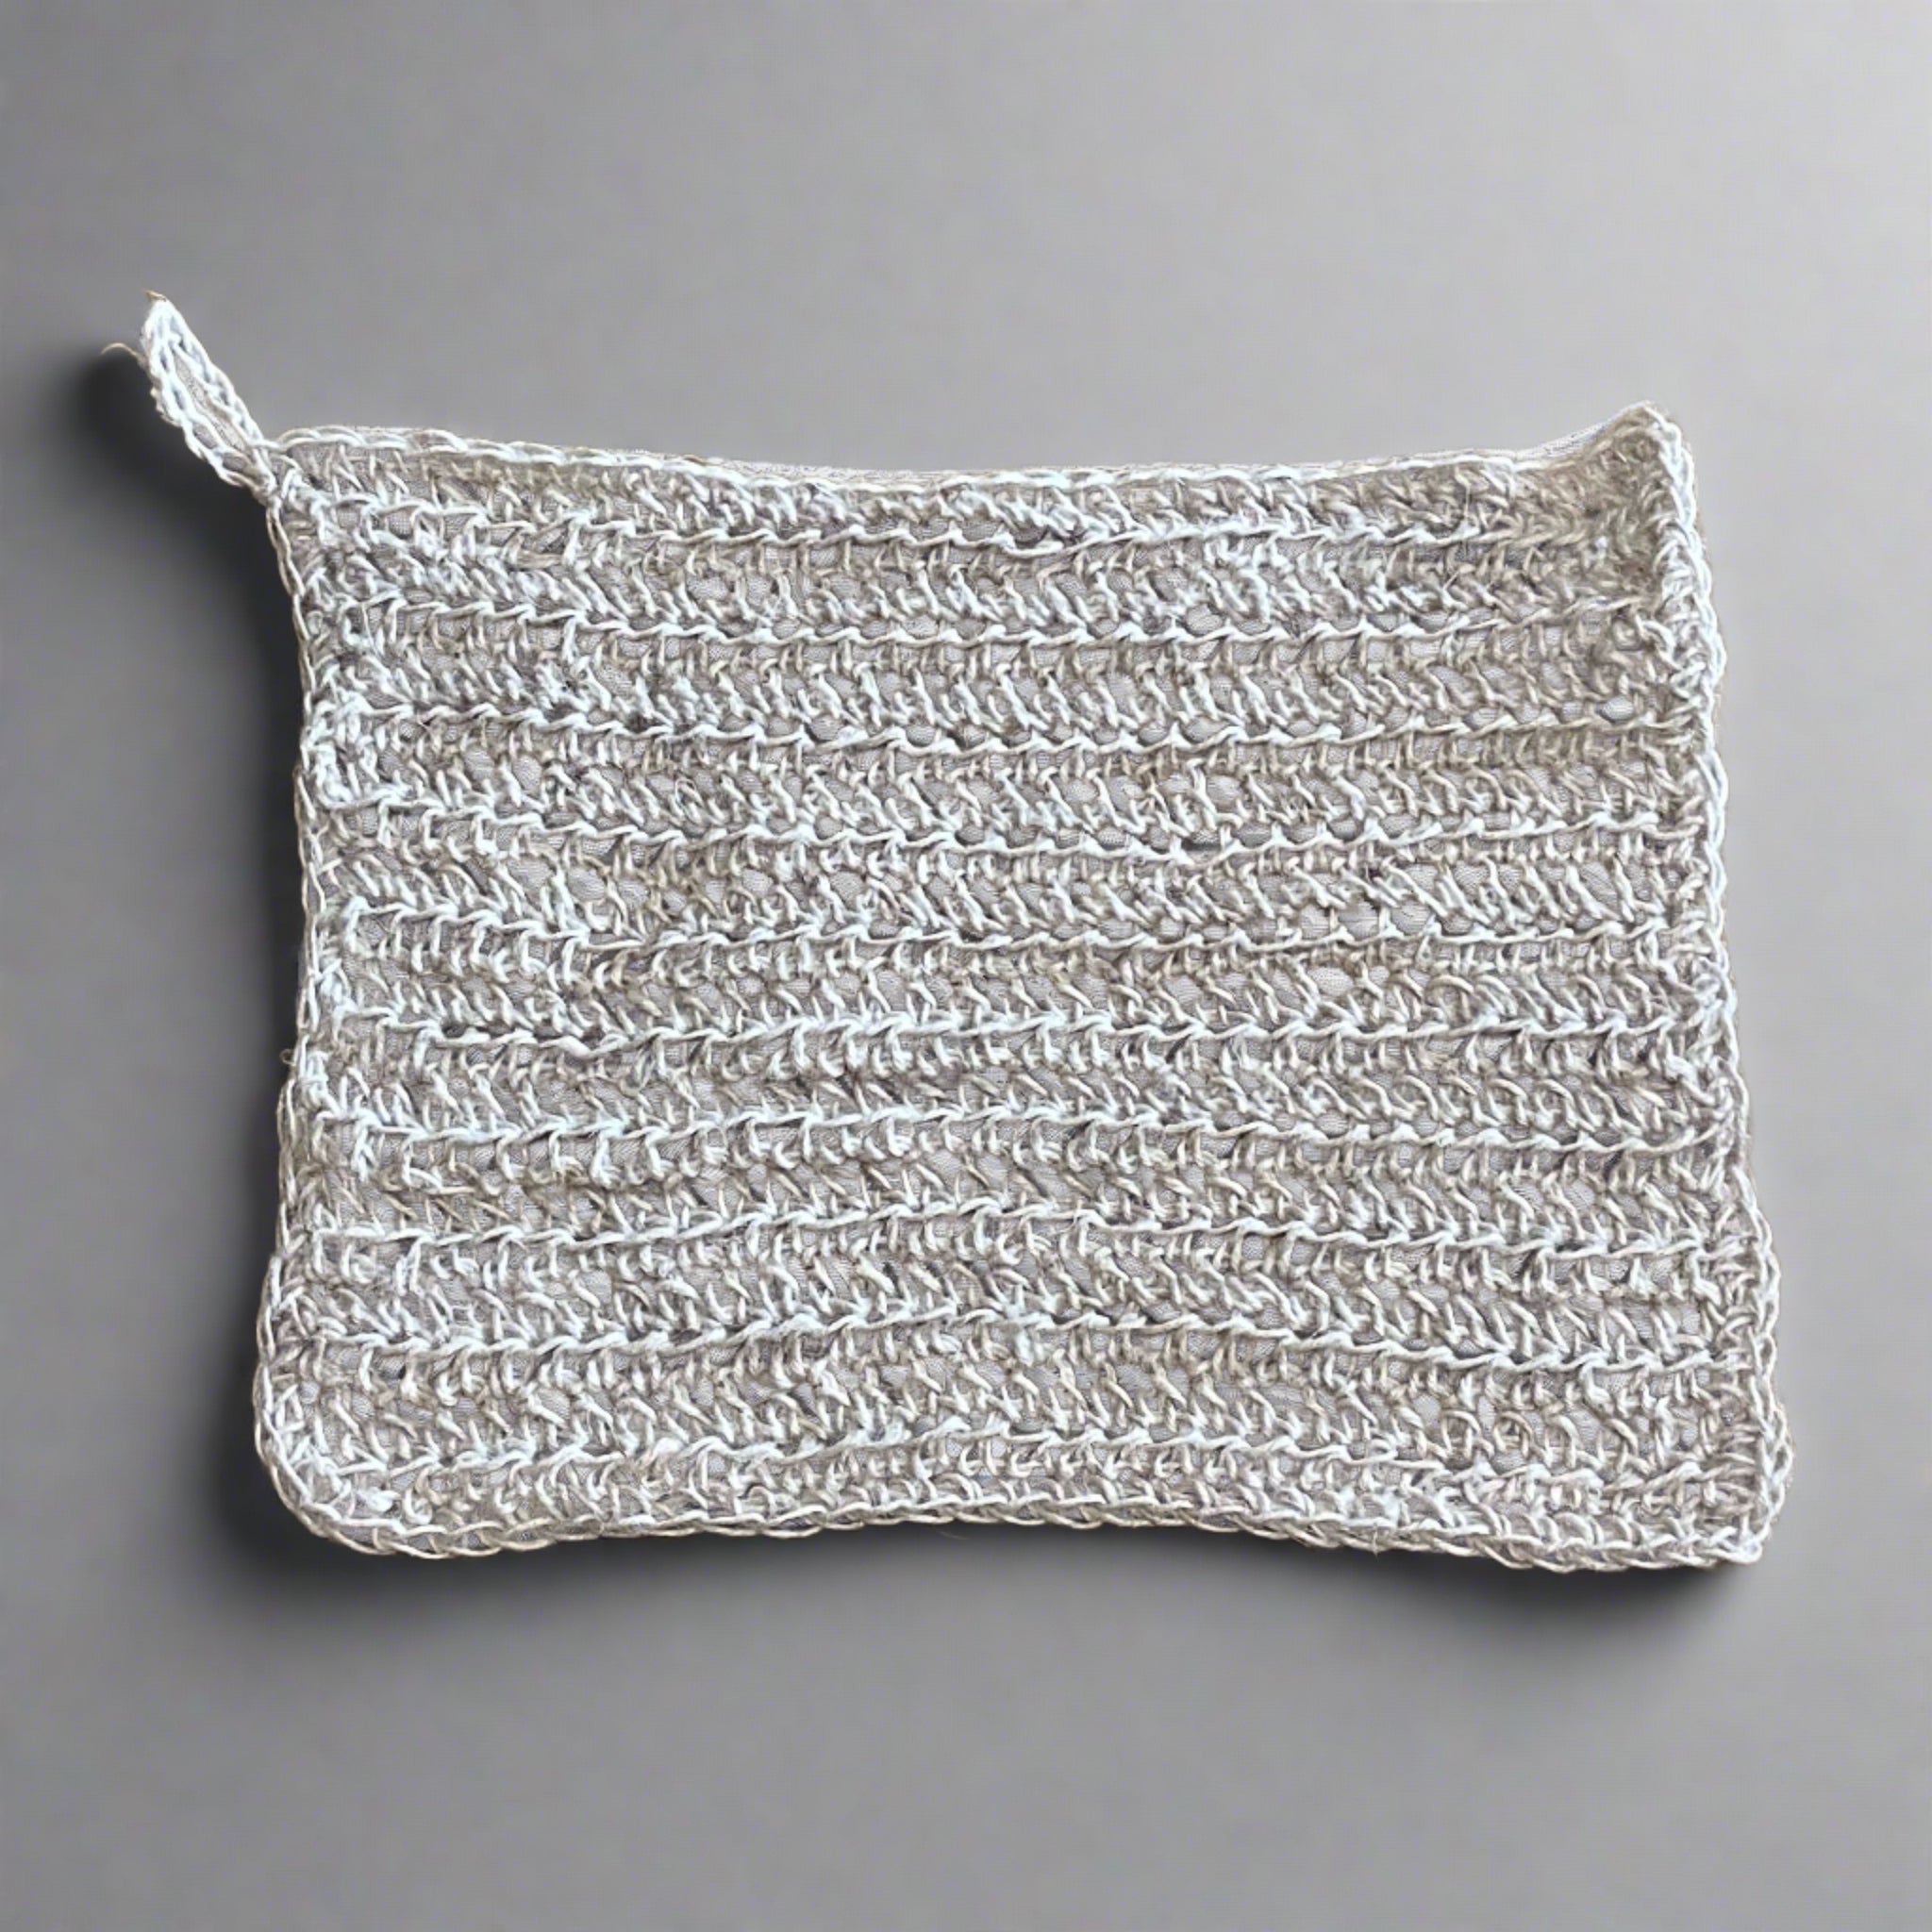 Antibacterial hemp washcloth handmade for toxin cleanser 